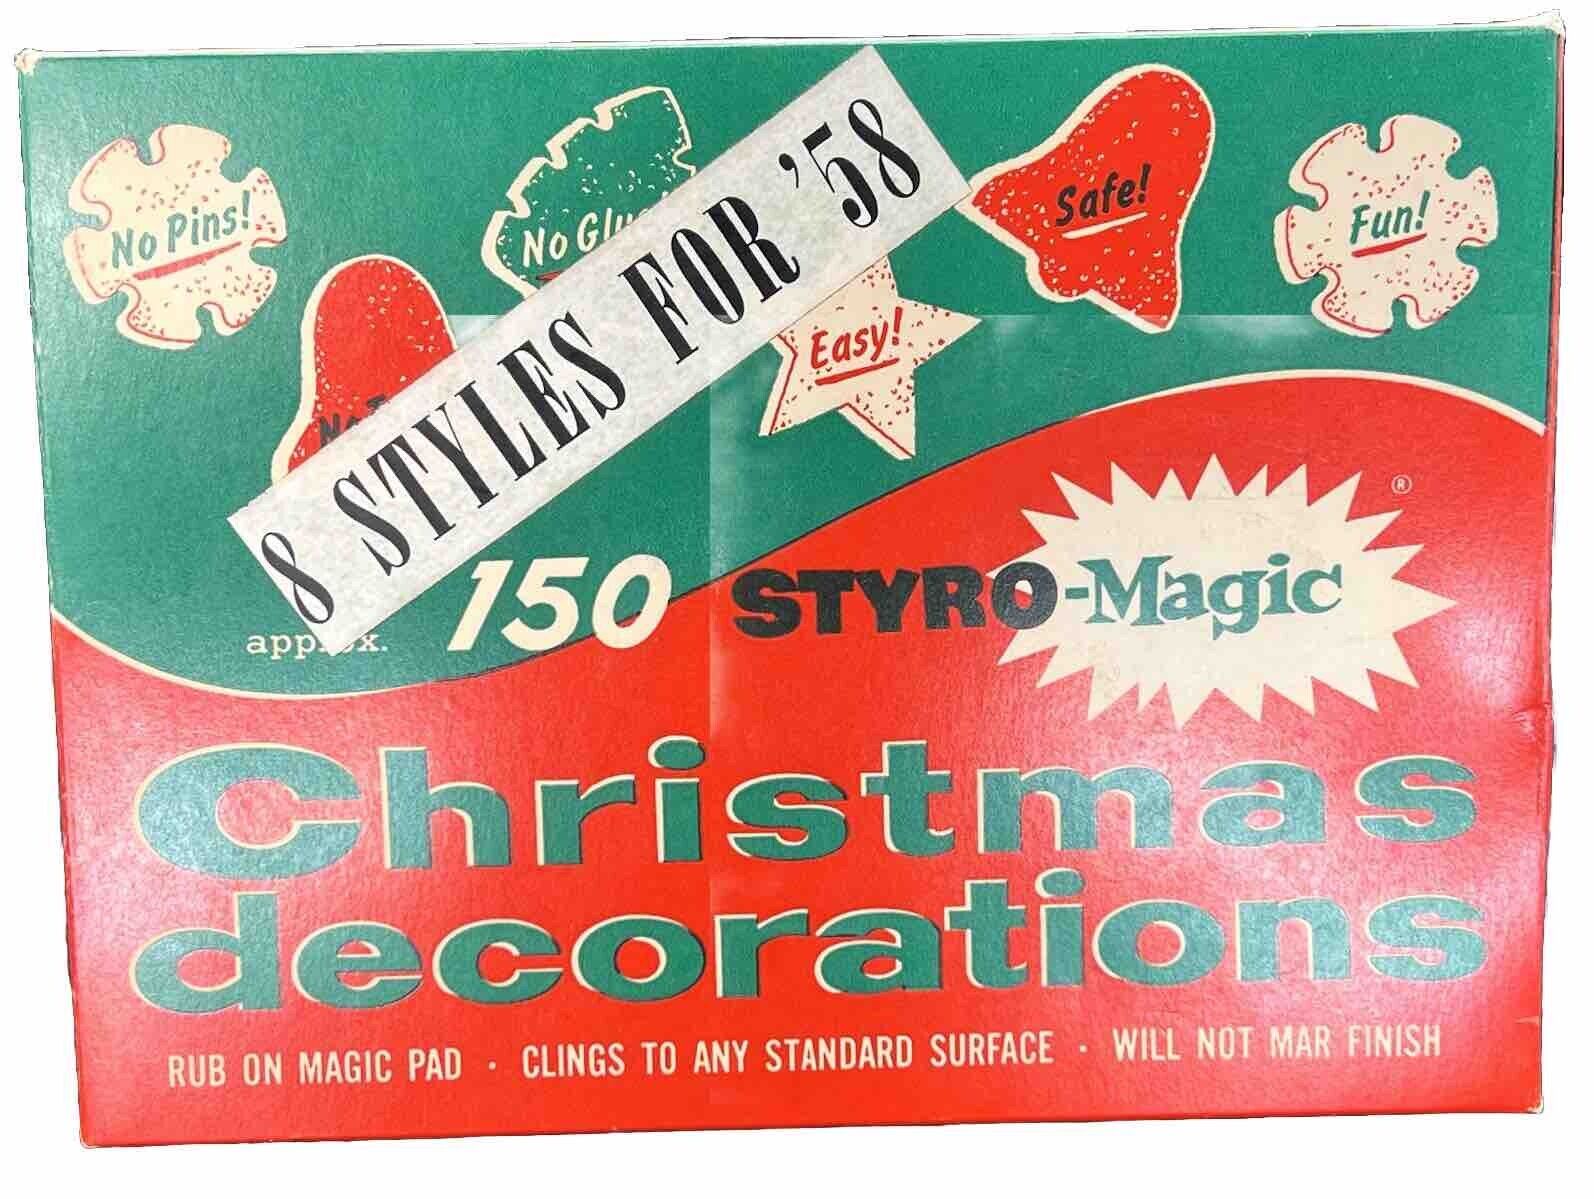 STYRO-Magic Christmas Decorations Original Box Styrofoam Stick Ons Vintage 1958